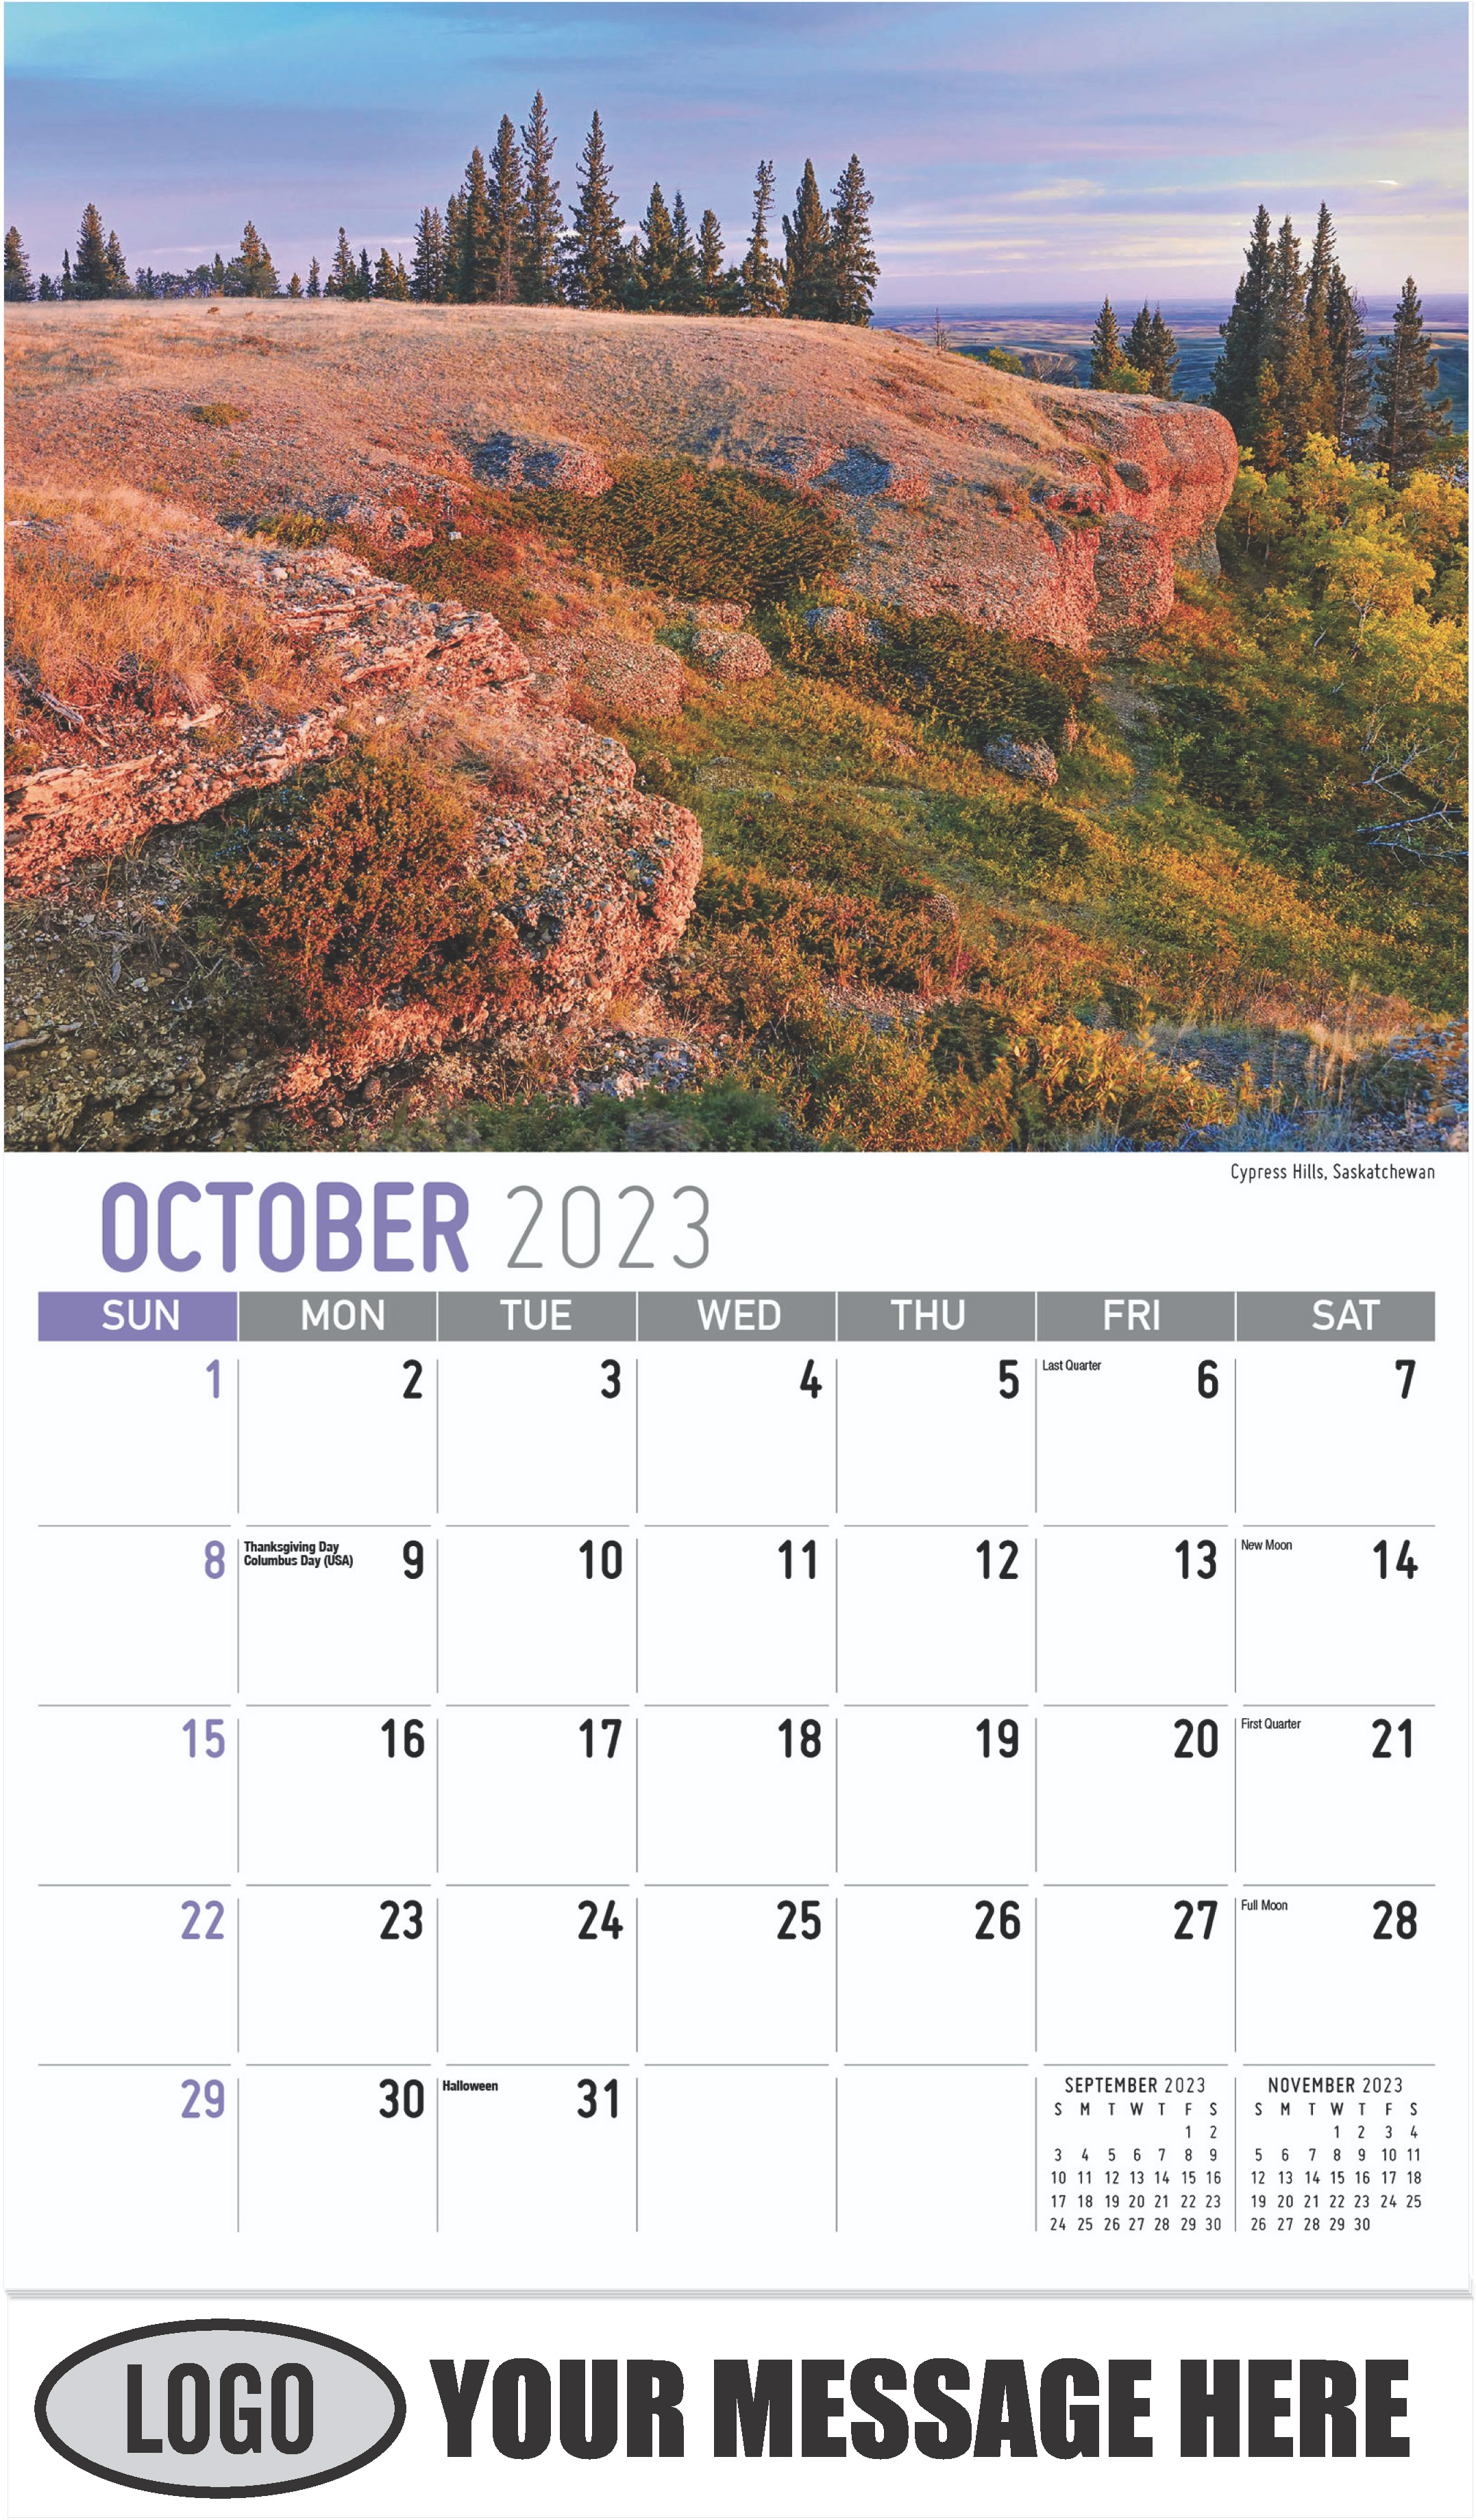 Cypress Hills, Saskatchewan - October - Scenes of Western Canada 2023 Promotional Calendar